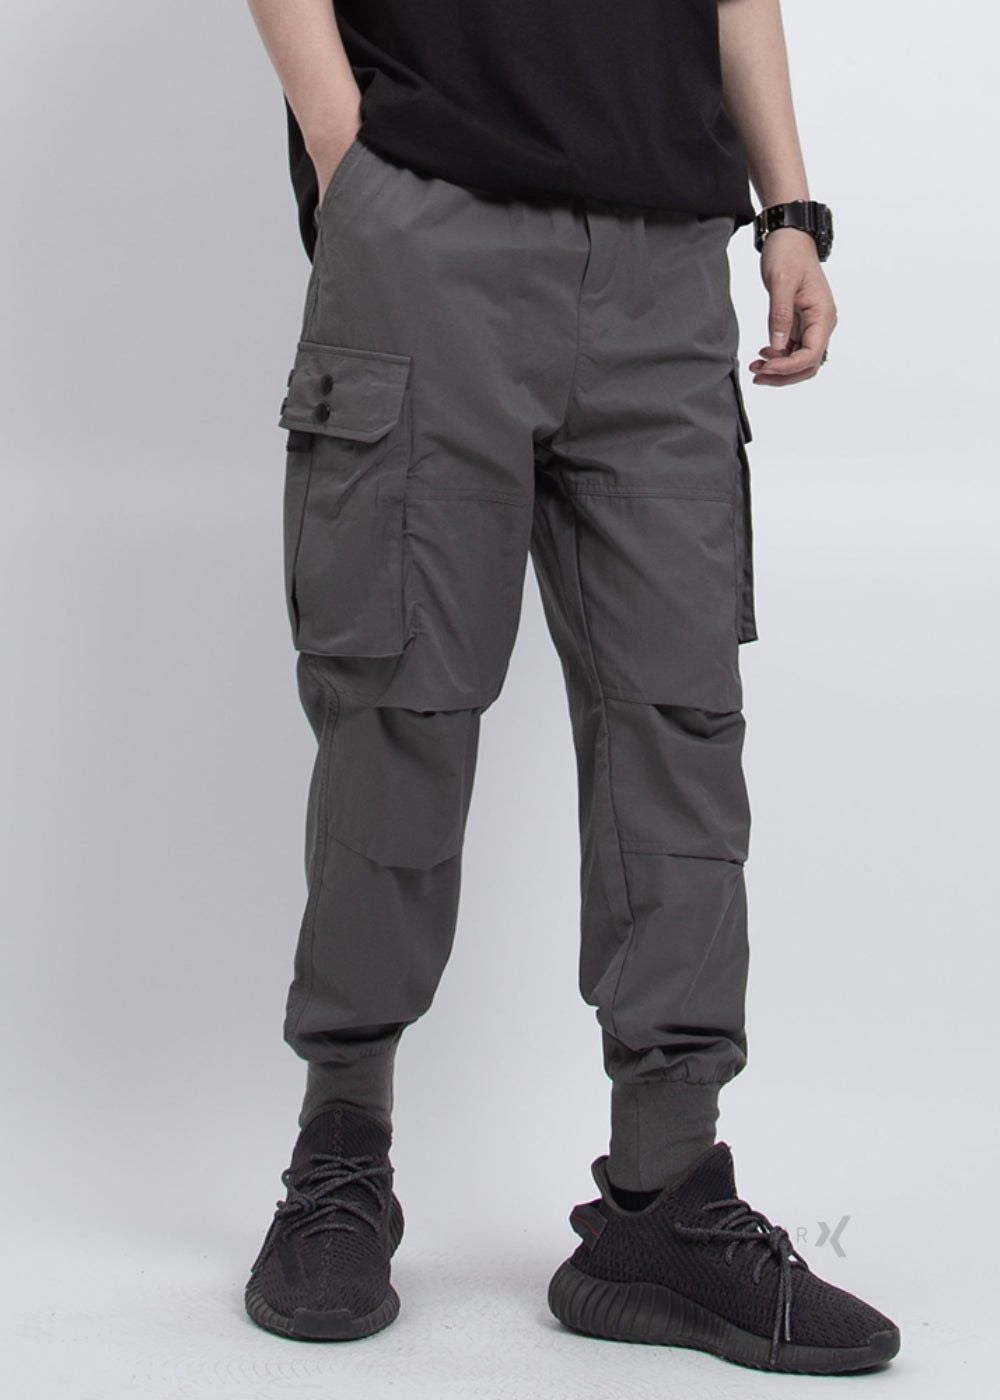 Darkwear Military Style Pants - Darkwear Pants - X